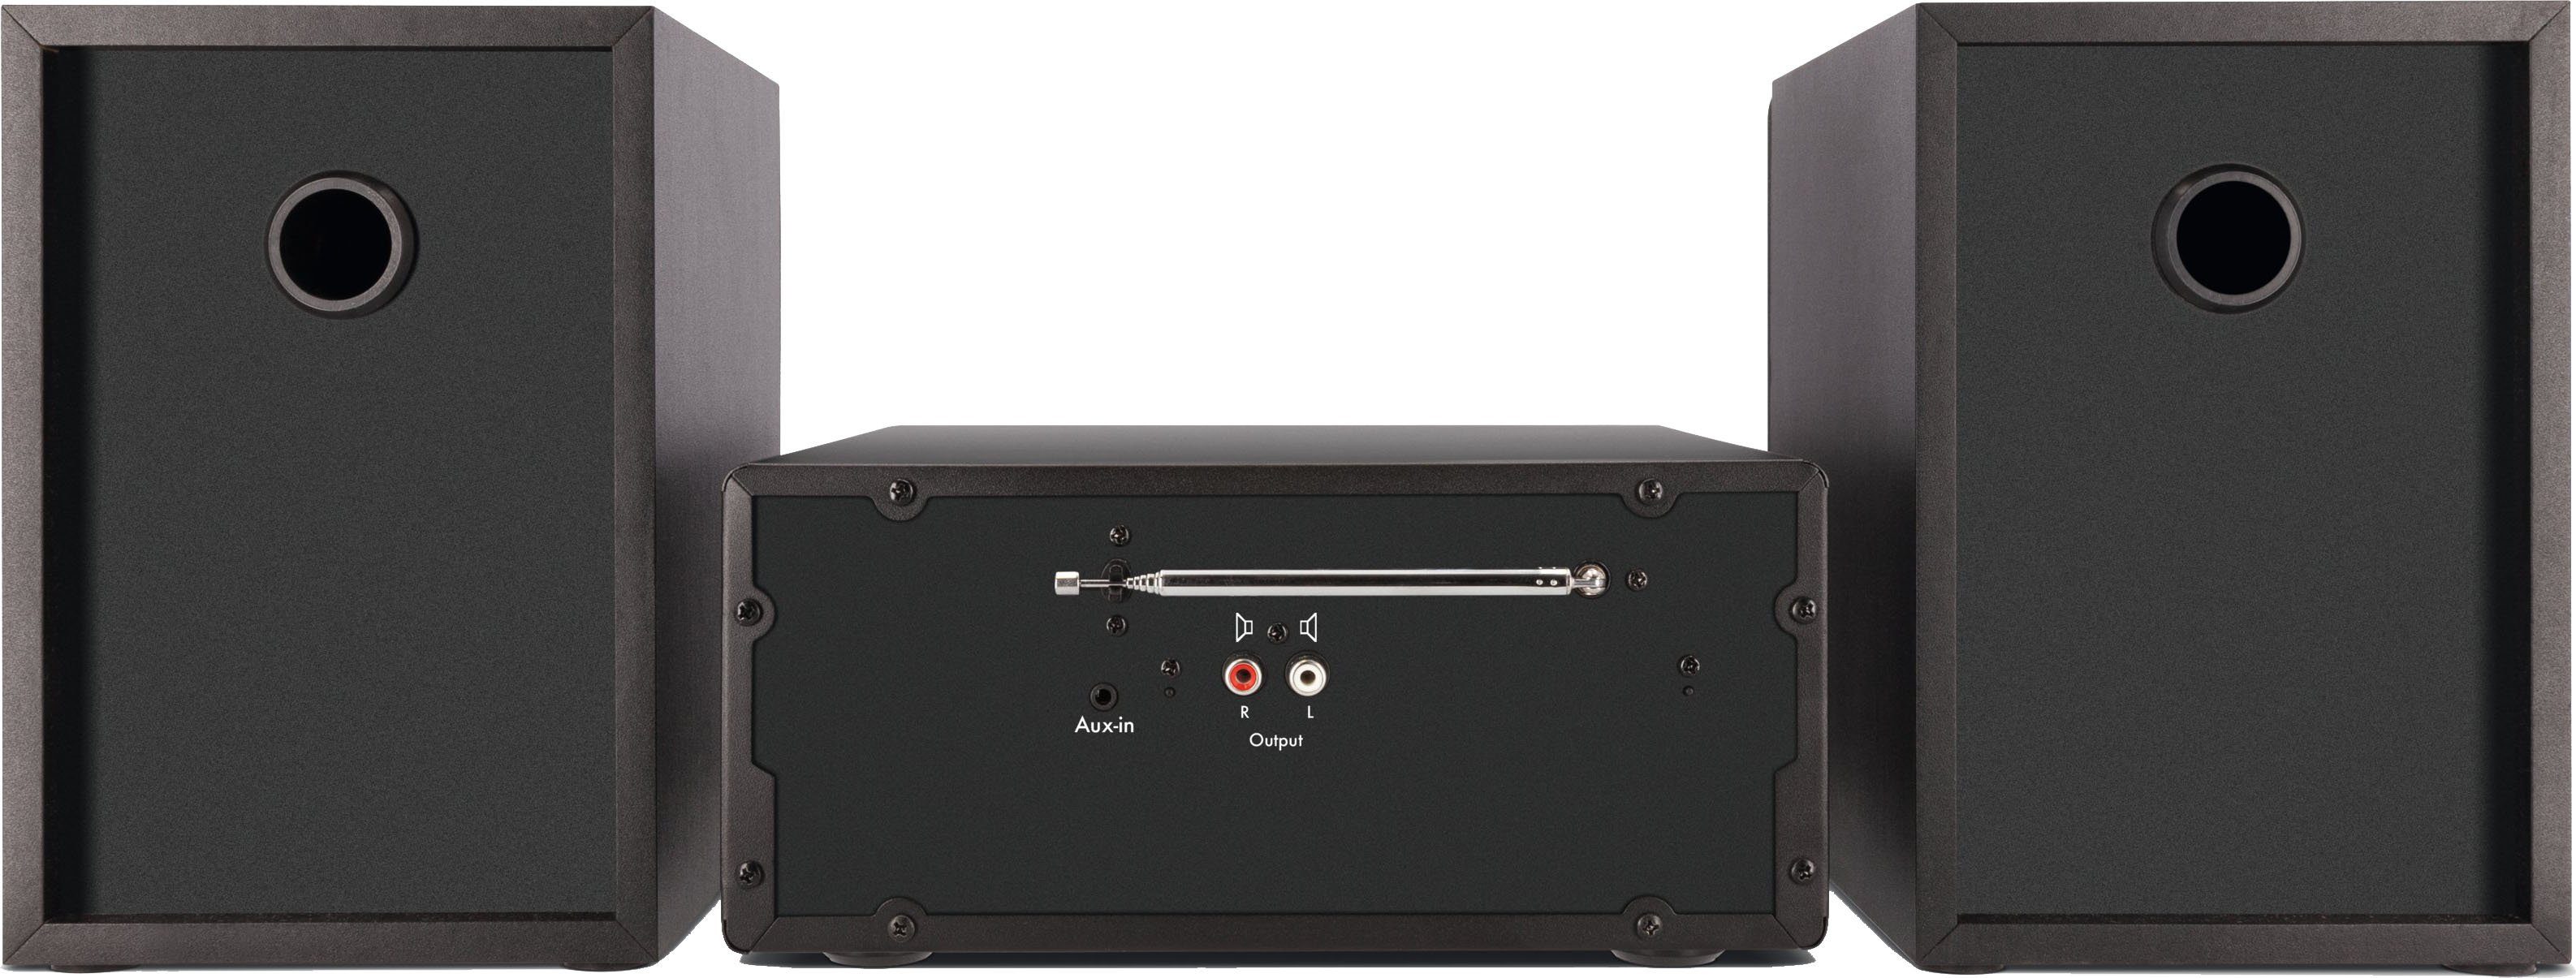 Stereo- UKW (DAB), TechniSat 40 mit Microanlage 700 (Digitalradio W) RDS, Internetradio, DIGITRADIO